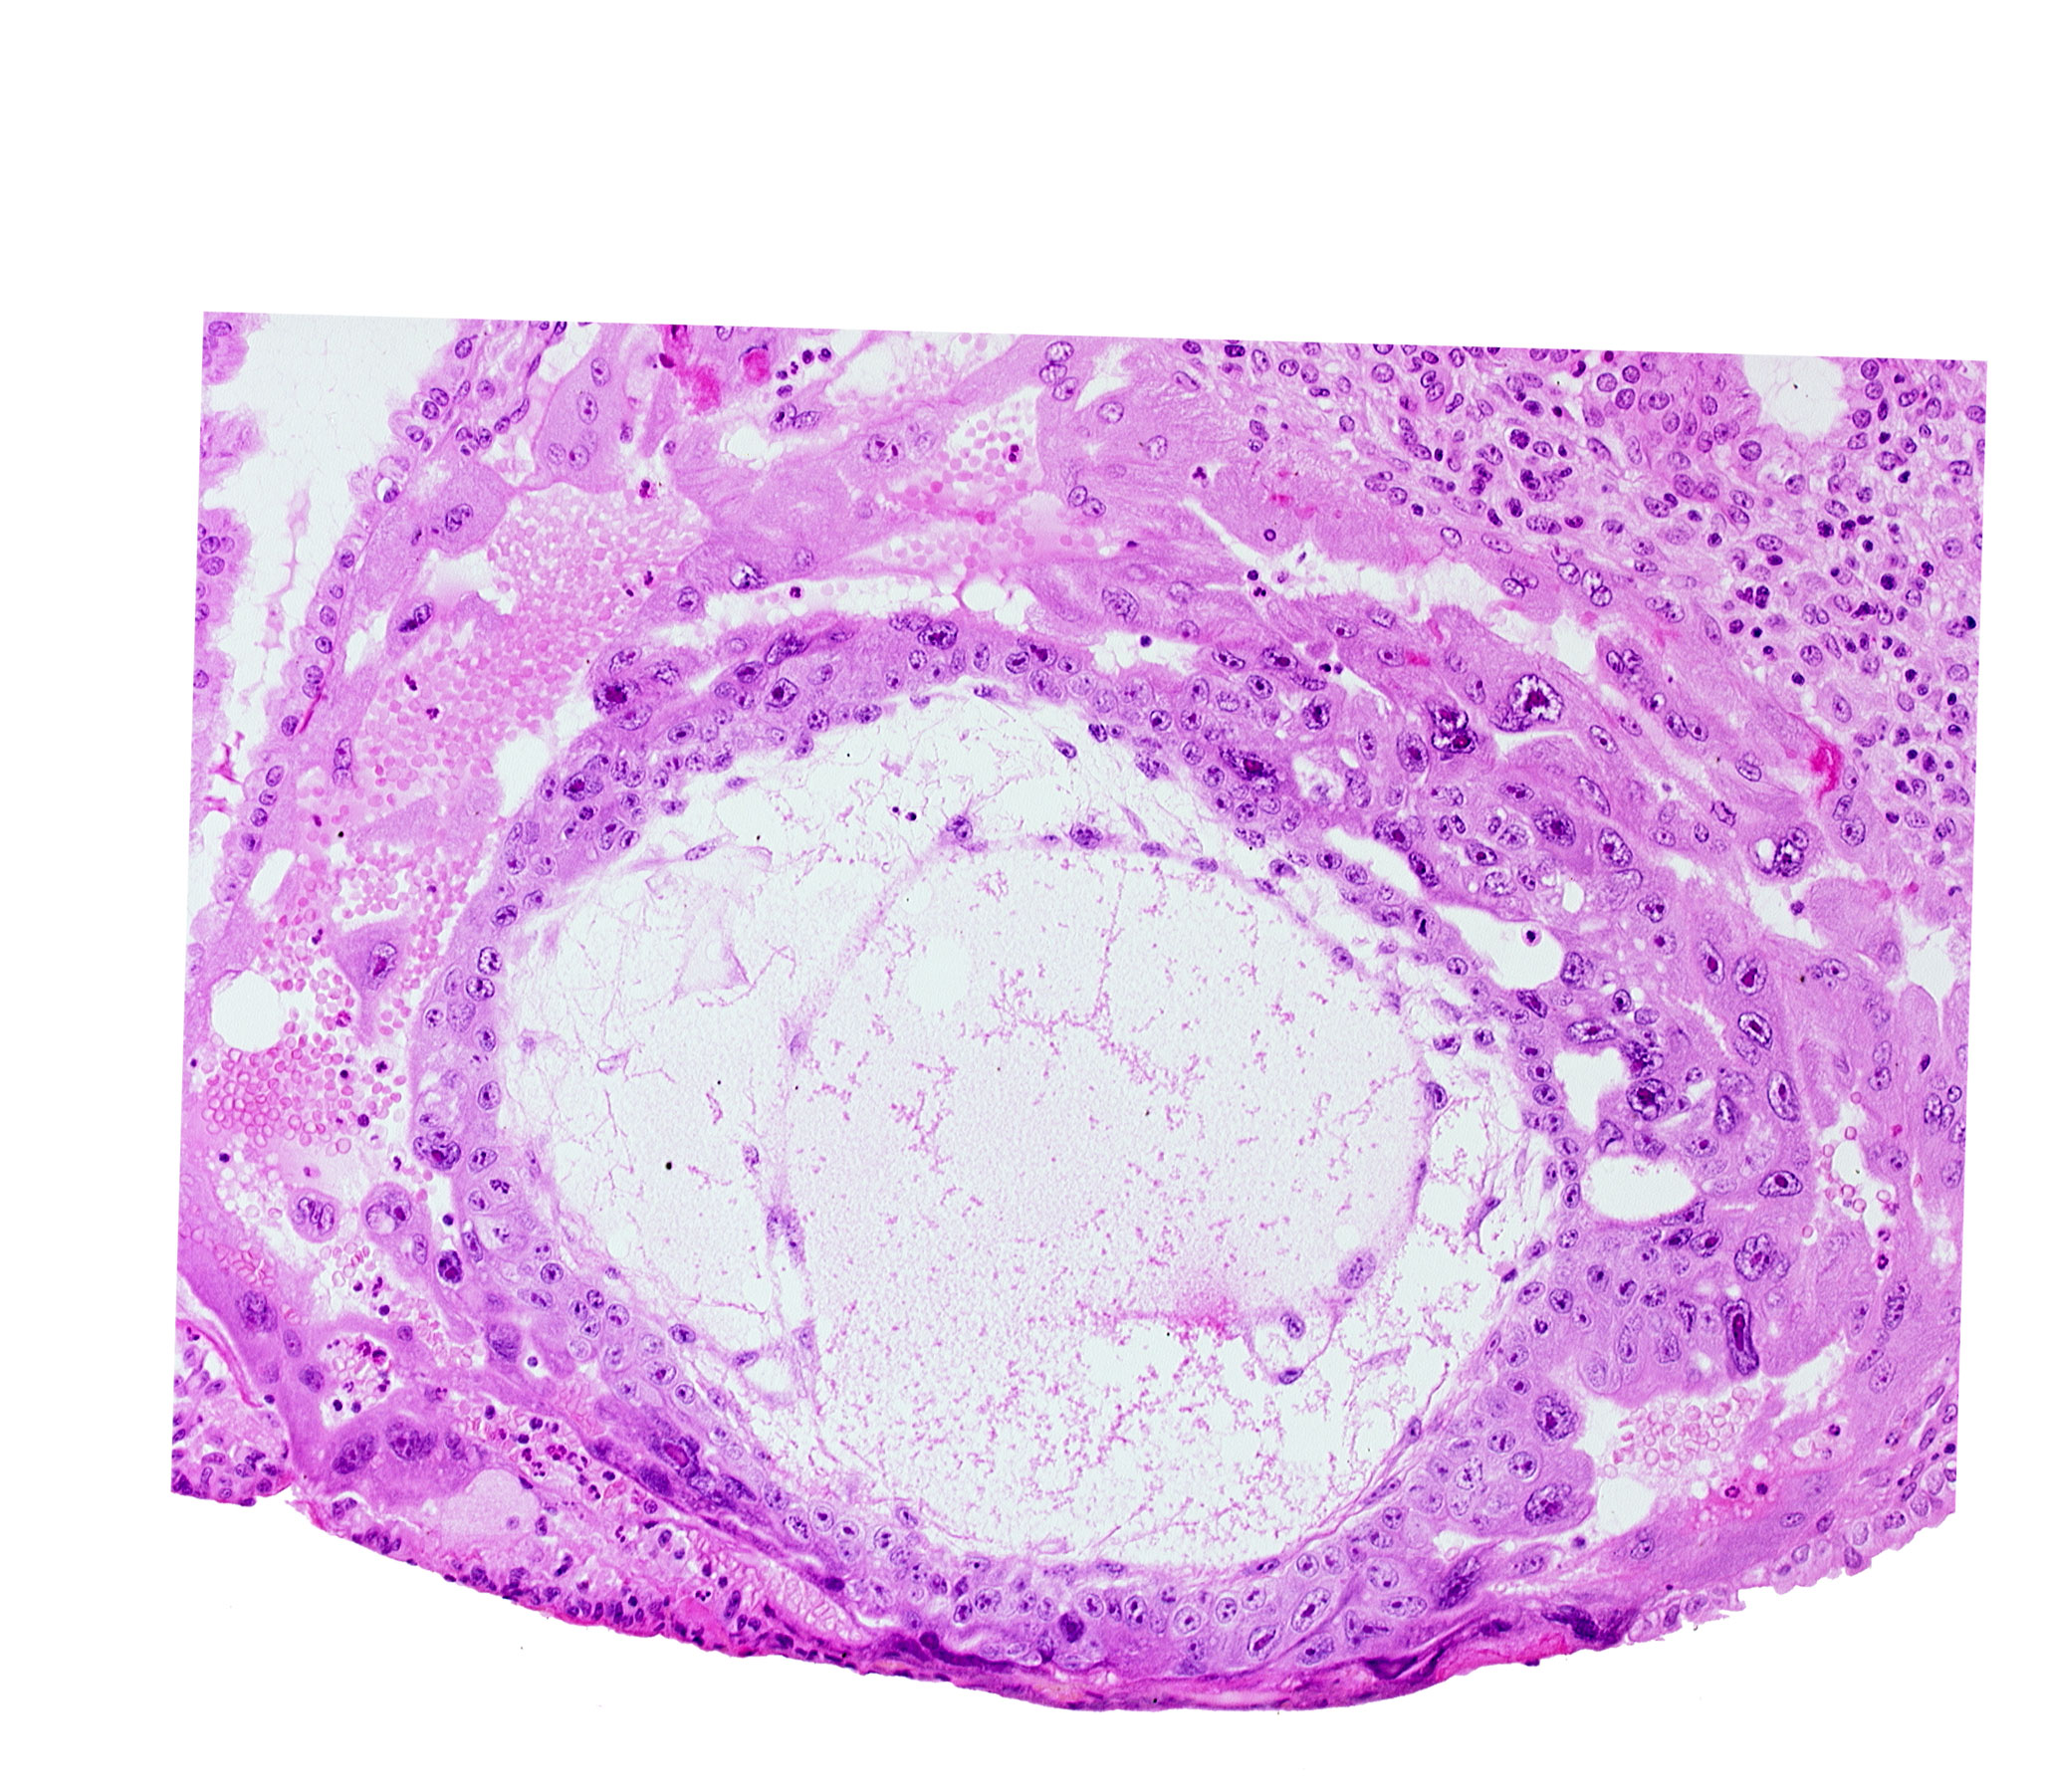 chorionic cavity, extra-embryonic mesoblast, uterine cavity